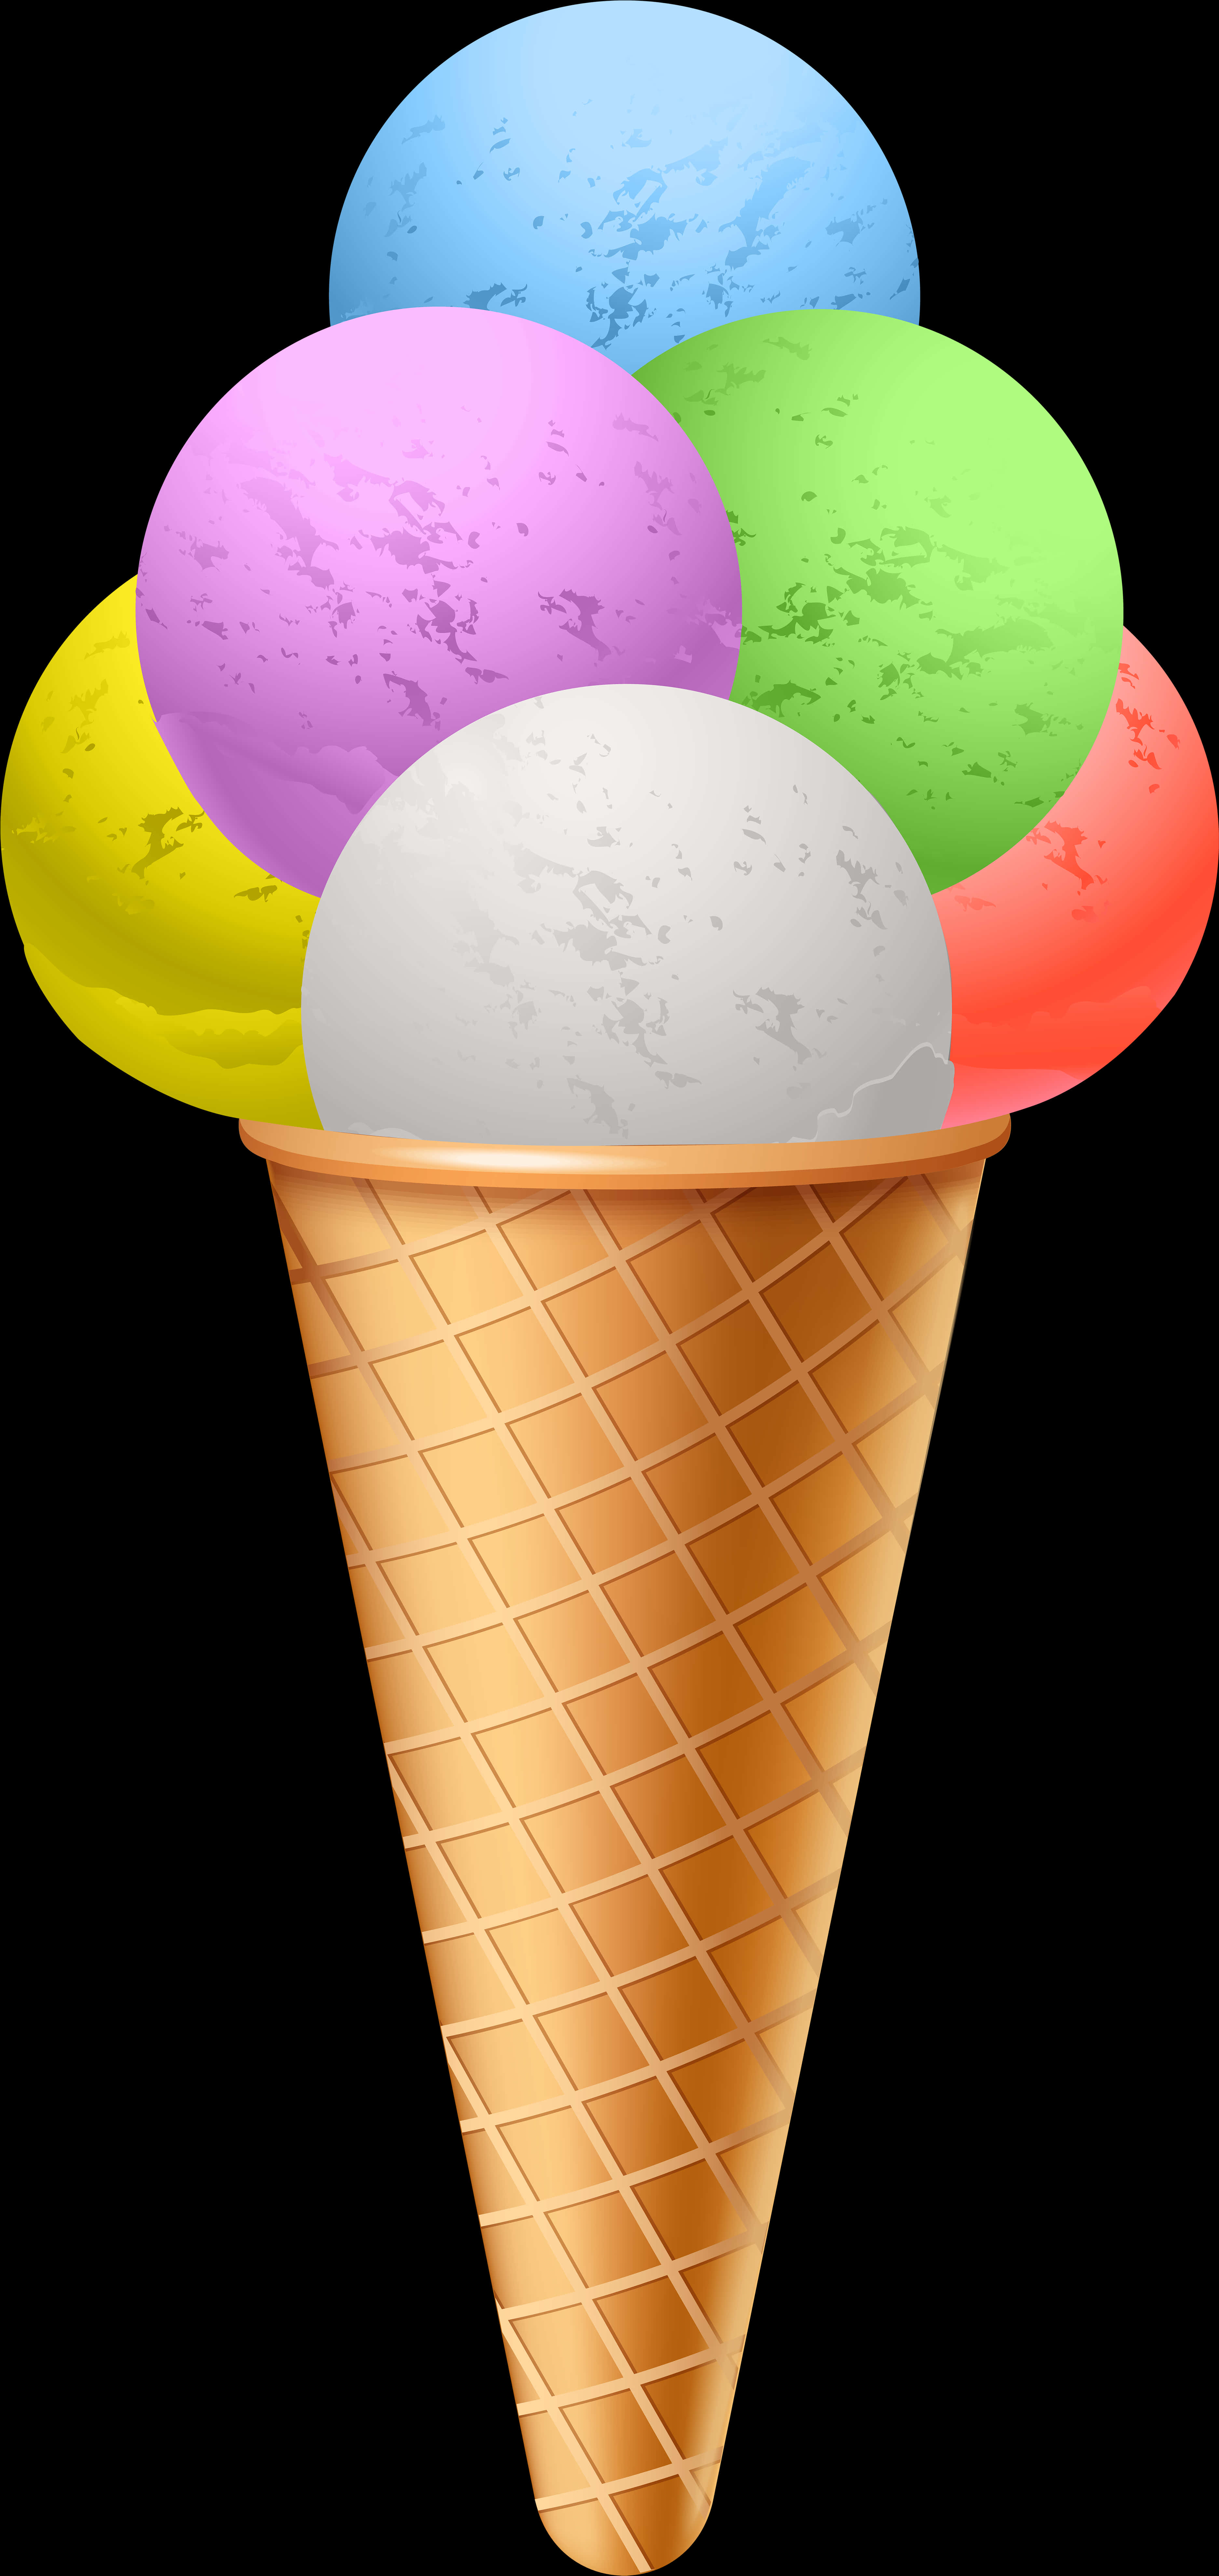 Colorful Ice Cream Scoops Cone